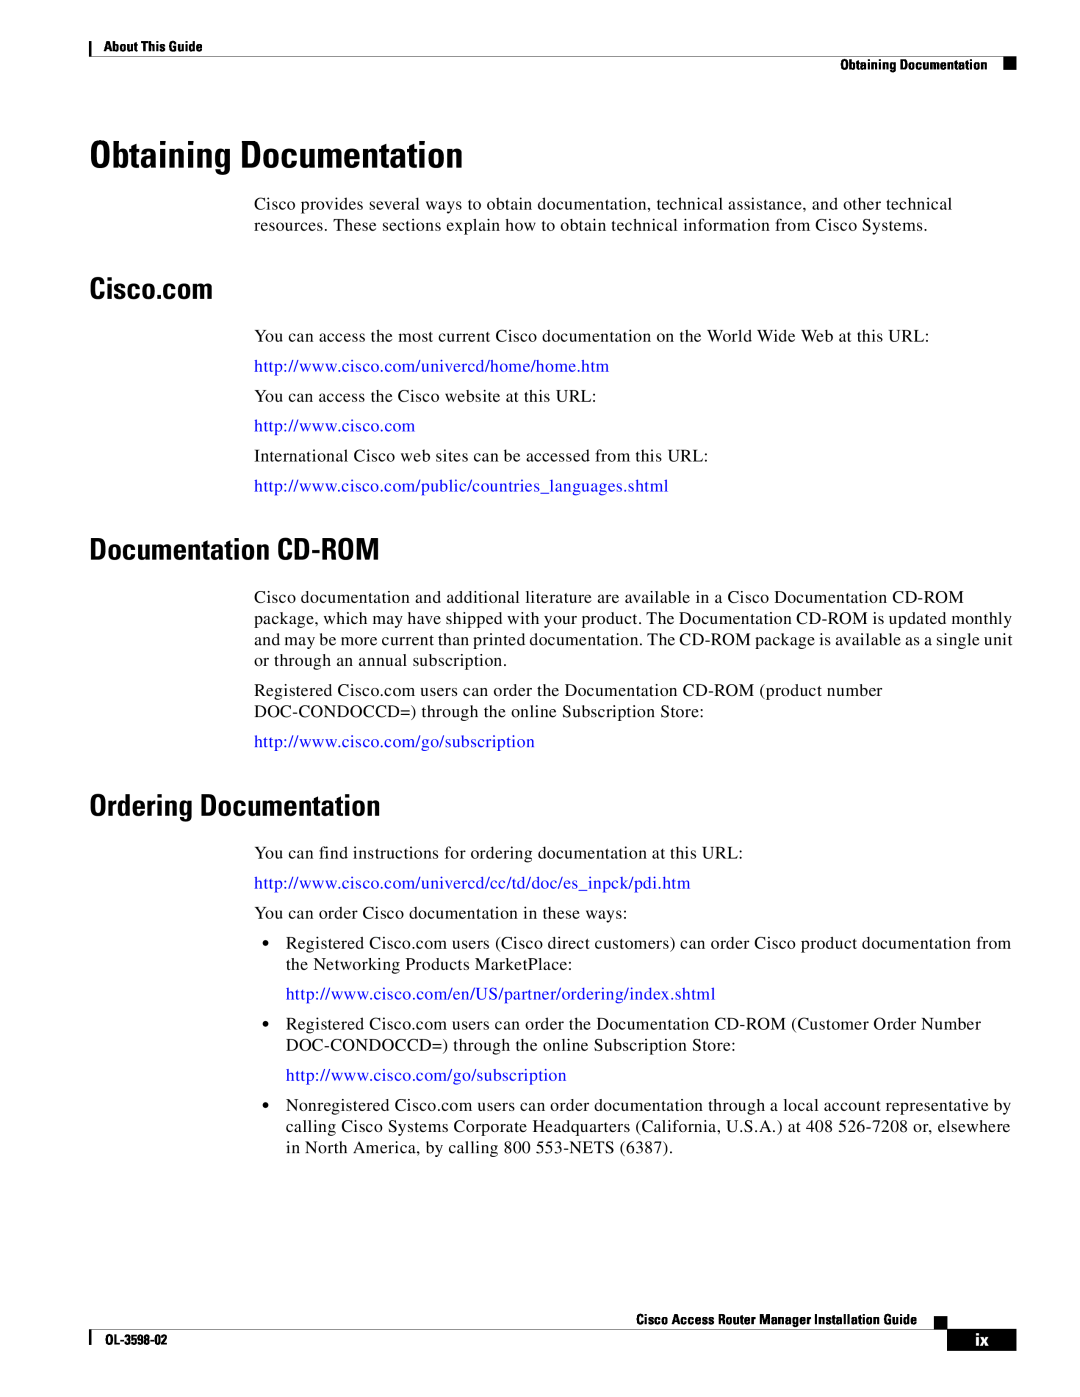 Cisco Systems OL-3598-02 manual Obtaining Documentation, Cisco.com, Documentation CD-ROM, Ordering Documentation 